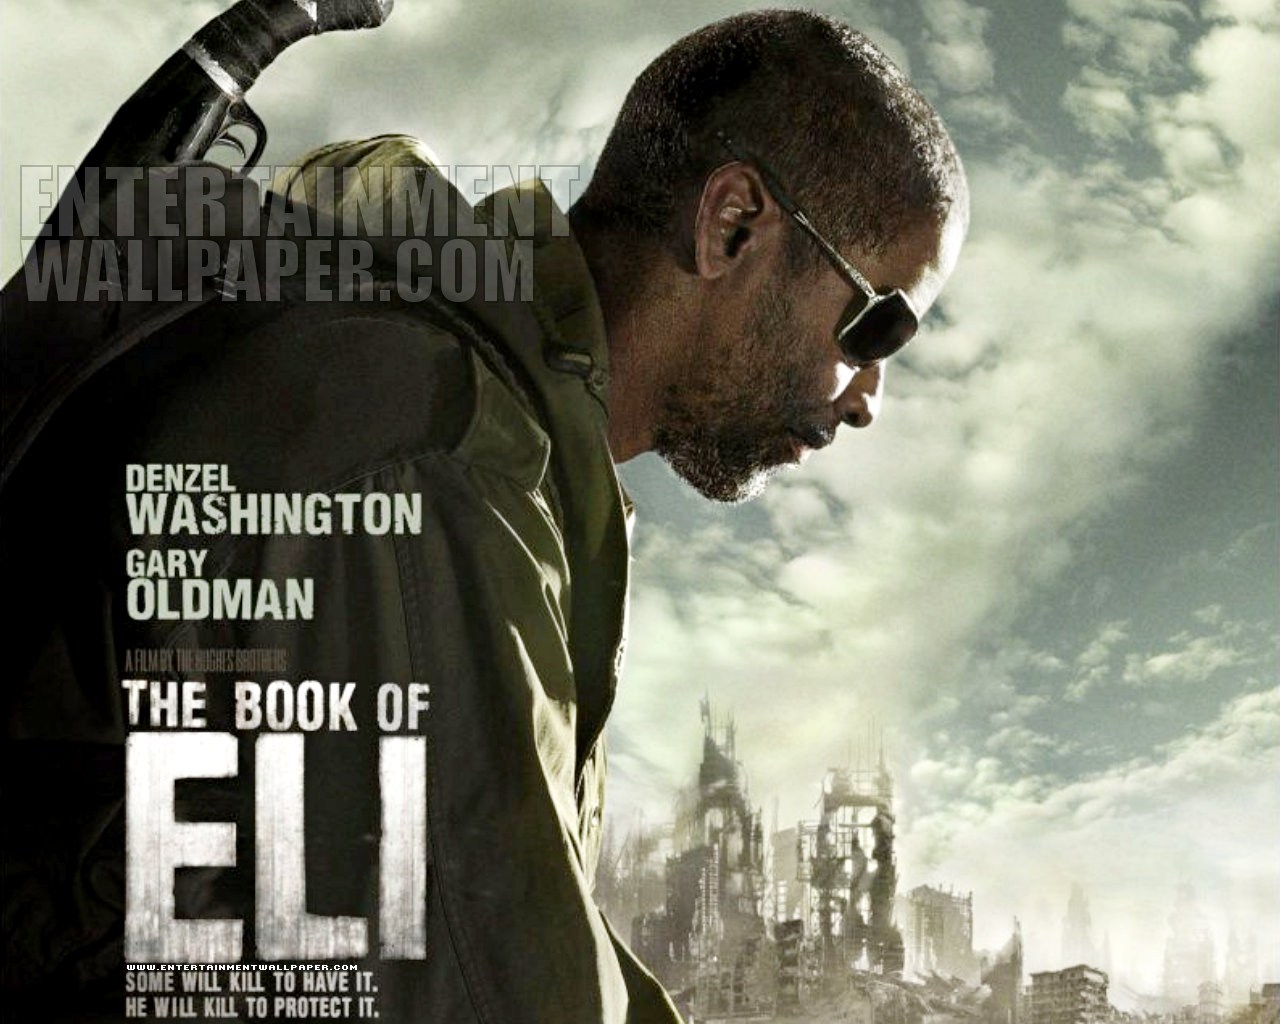 The Book of Eli starring Denzel Washington and Gary Oldman